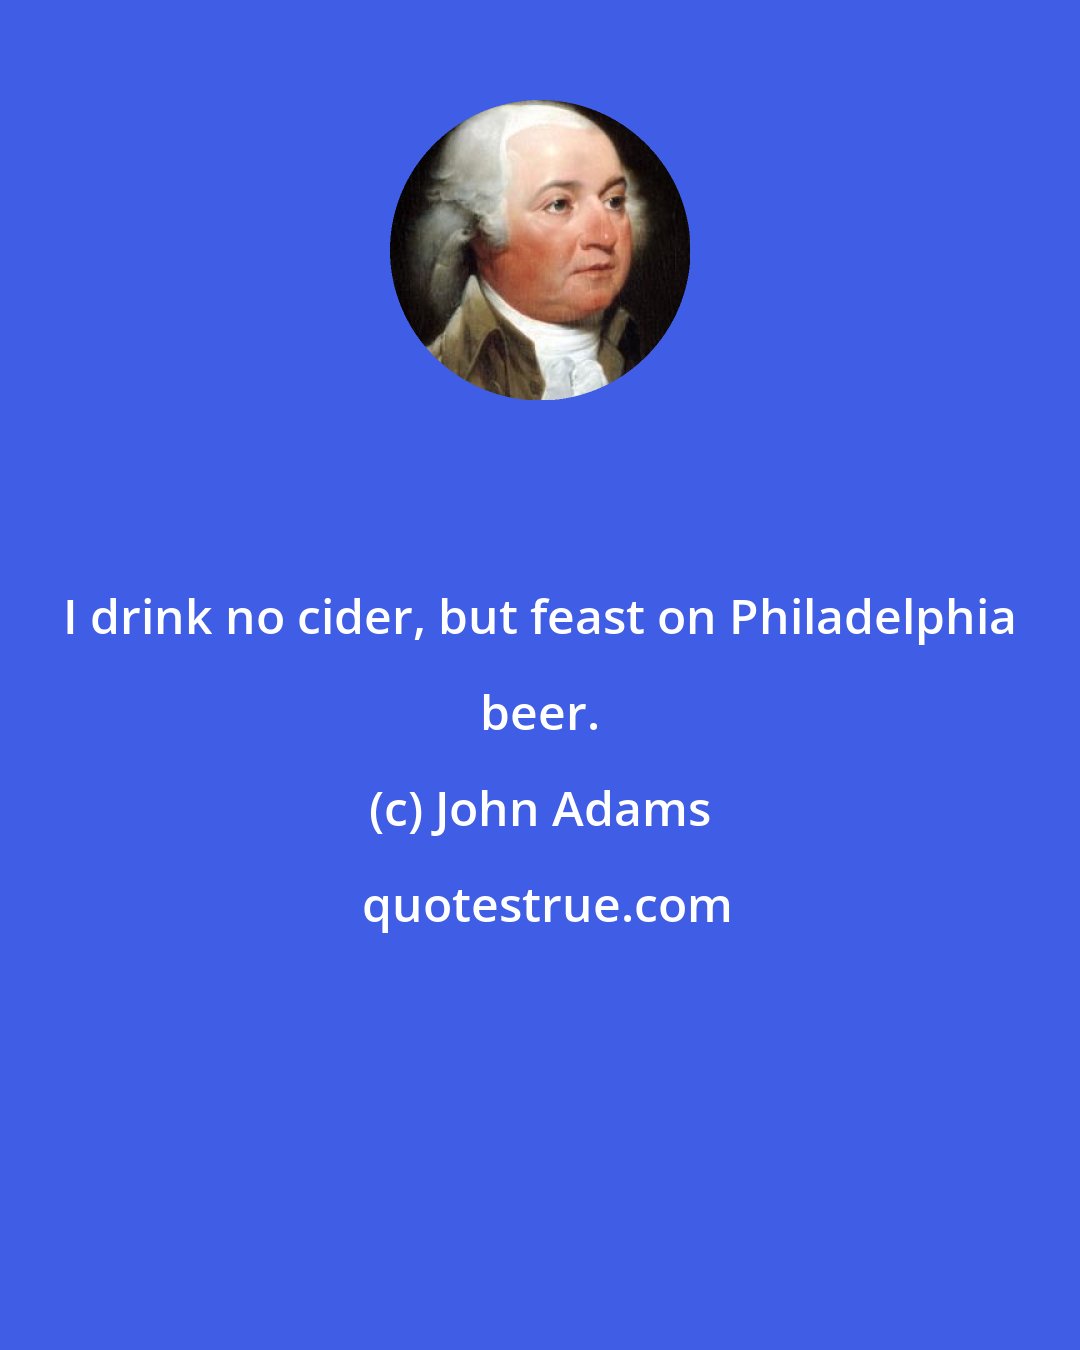 John Adams: I drink no cider, but feast on Philadelphia beer.